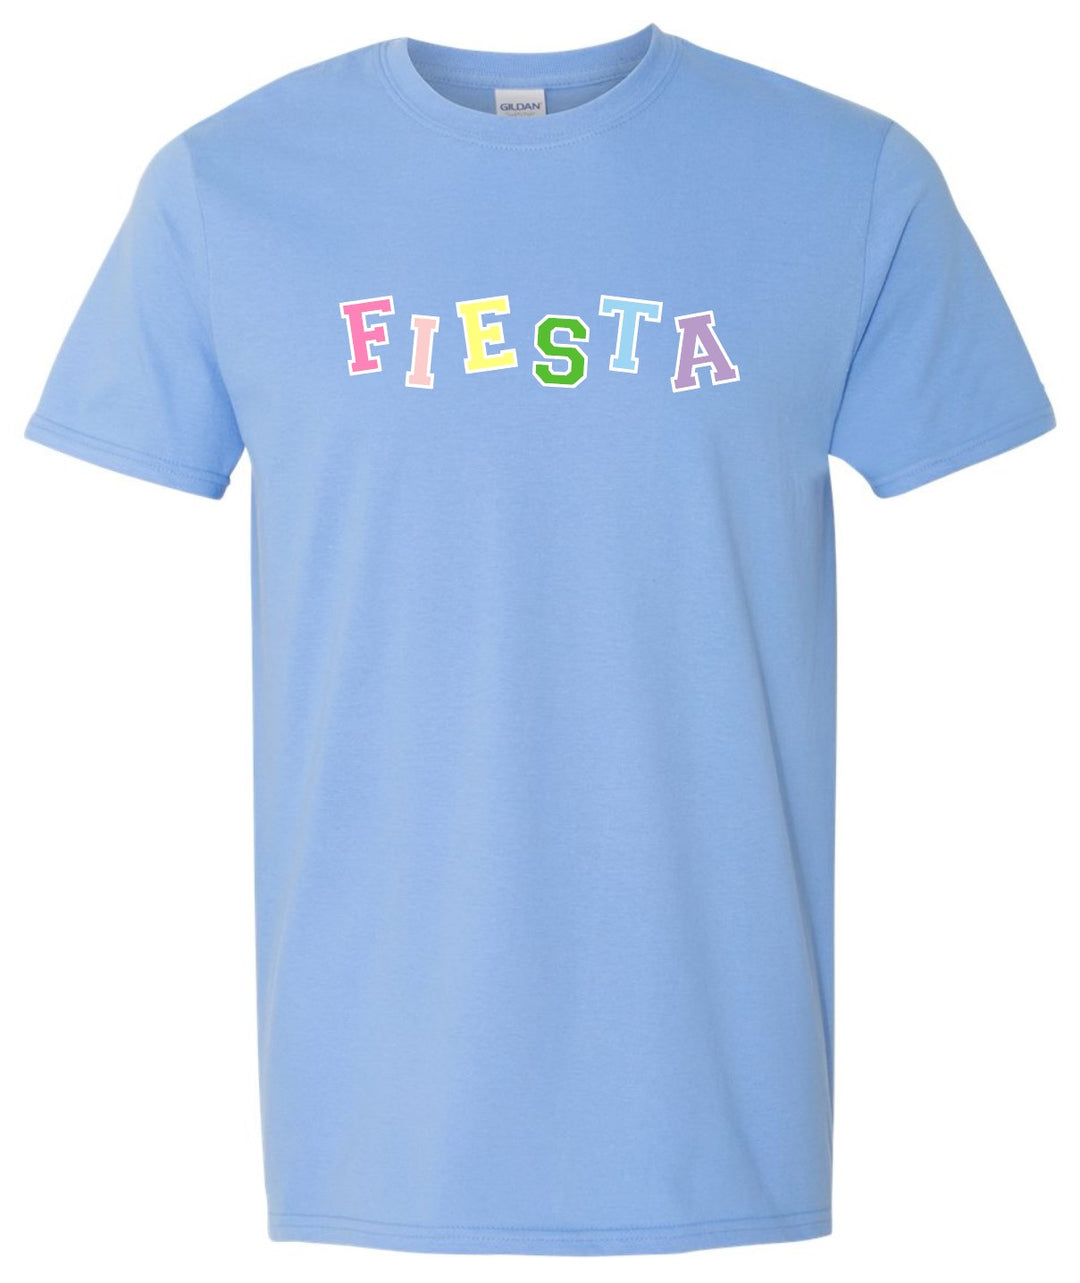 Fiesta Graphic T-Shirt